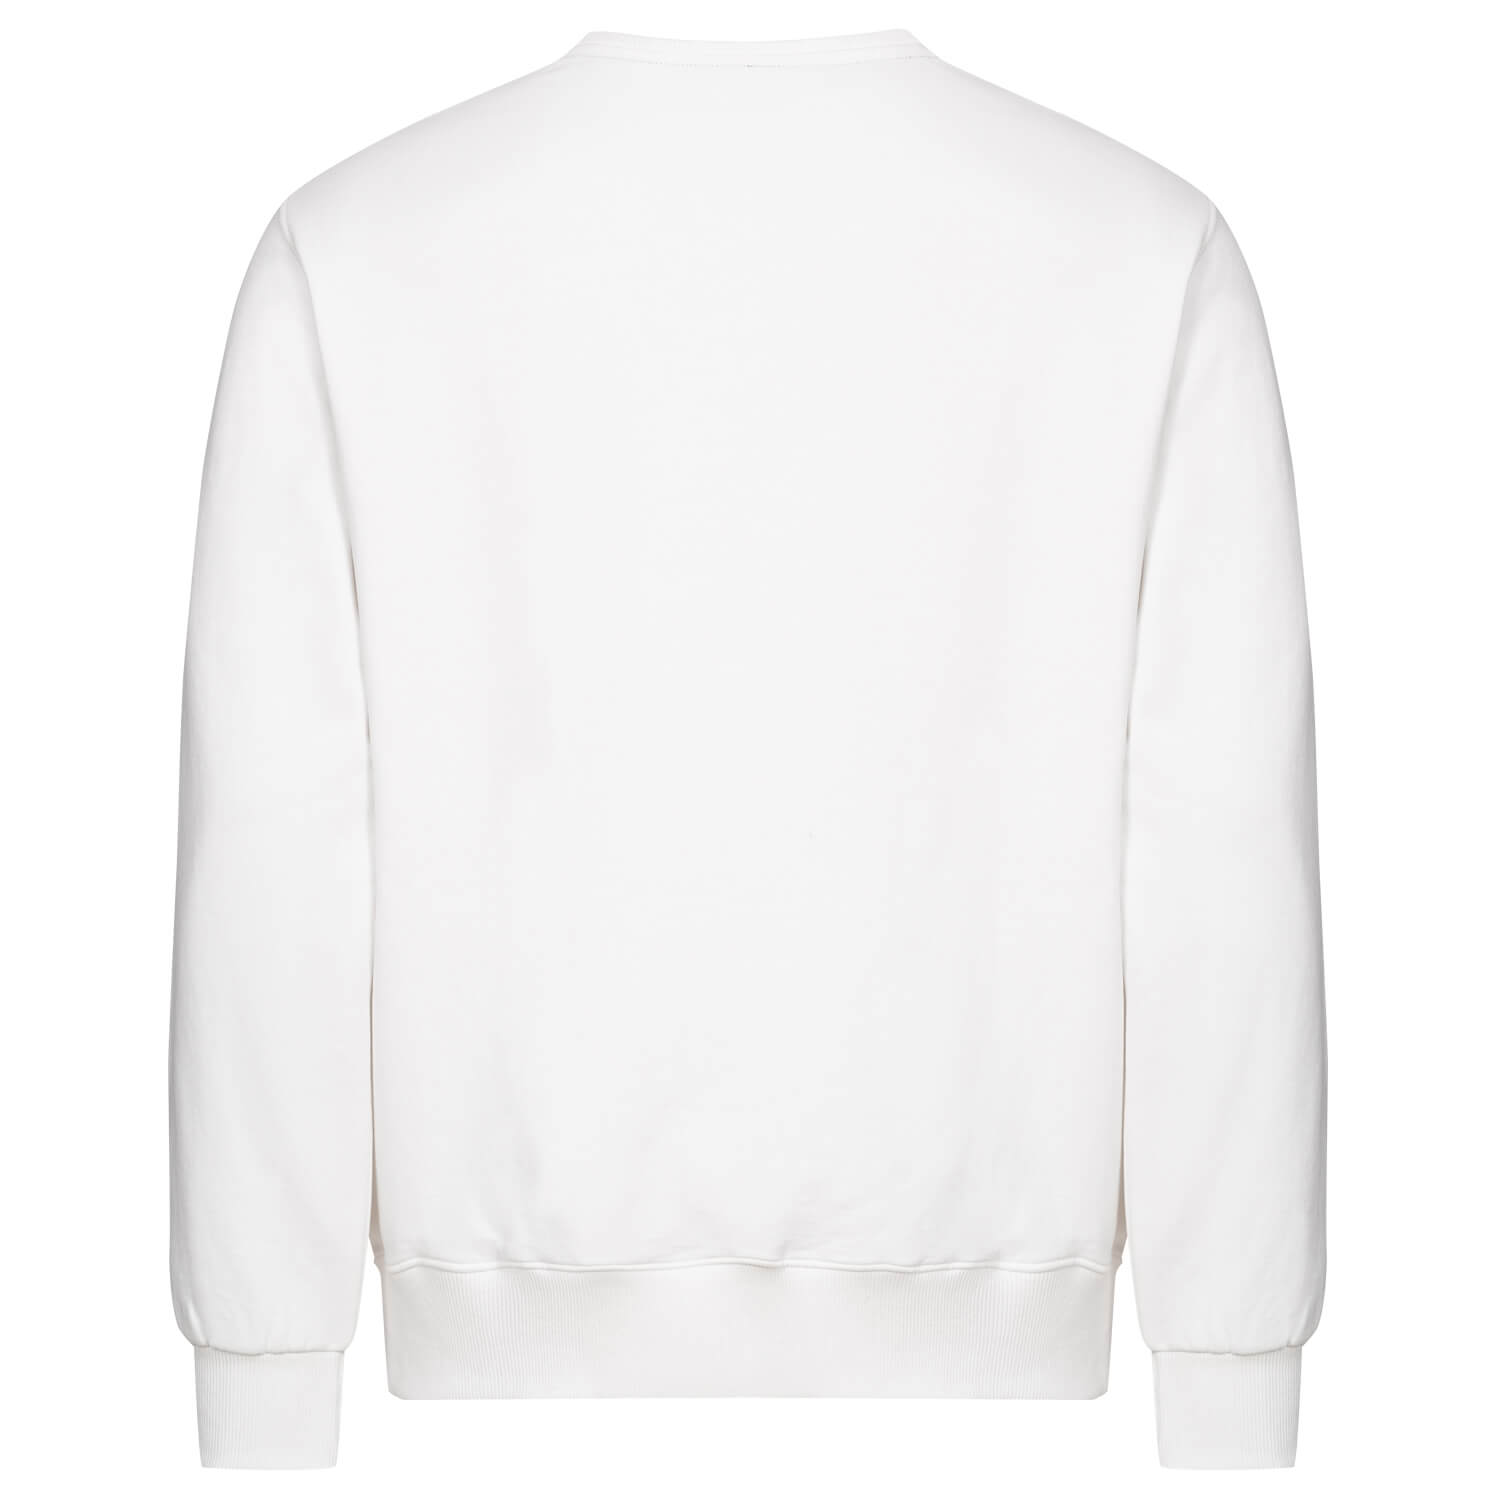 Bild 2: Sweater white Frankfurt